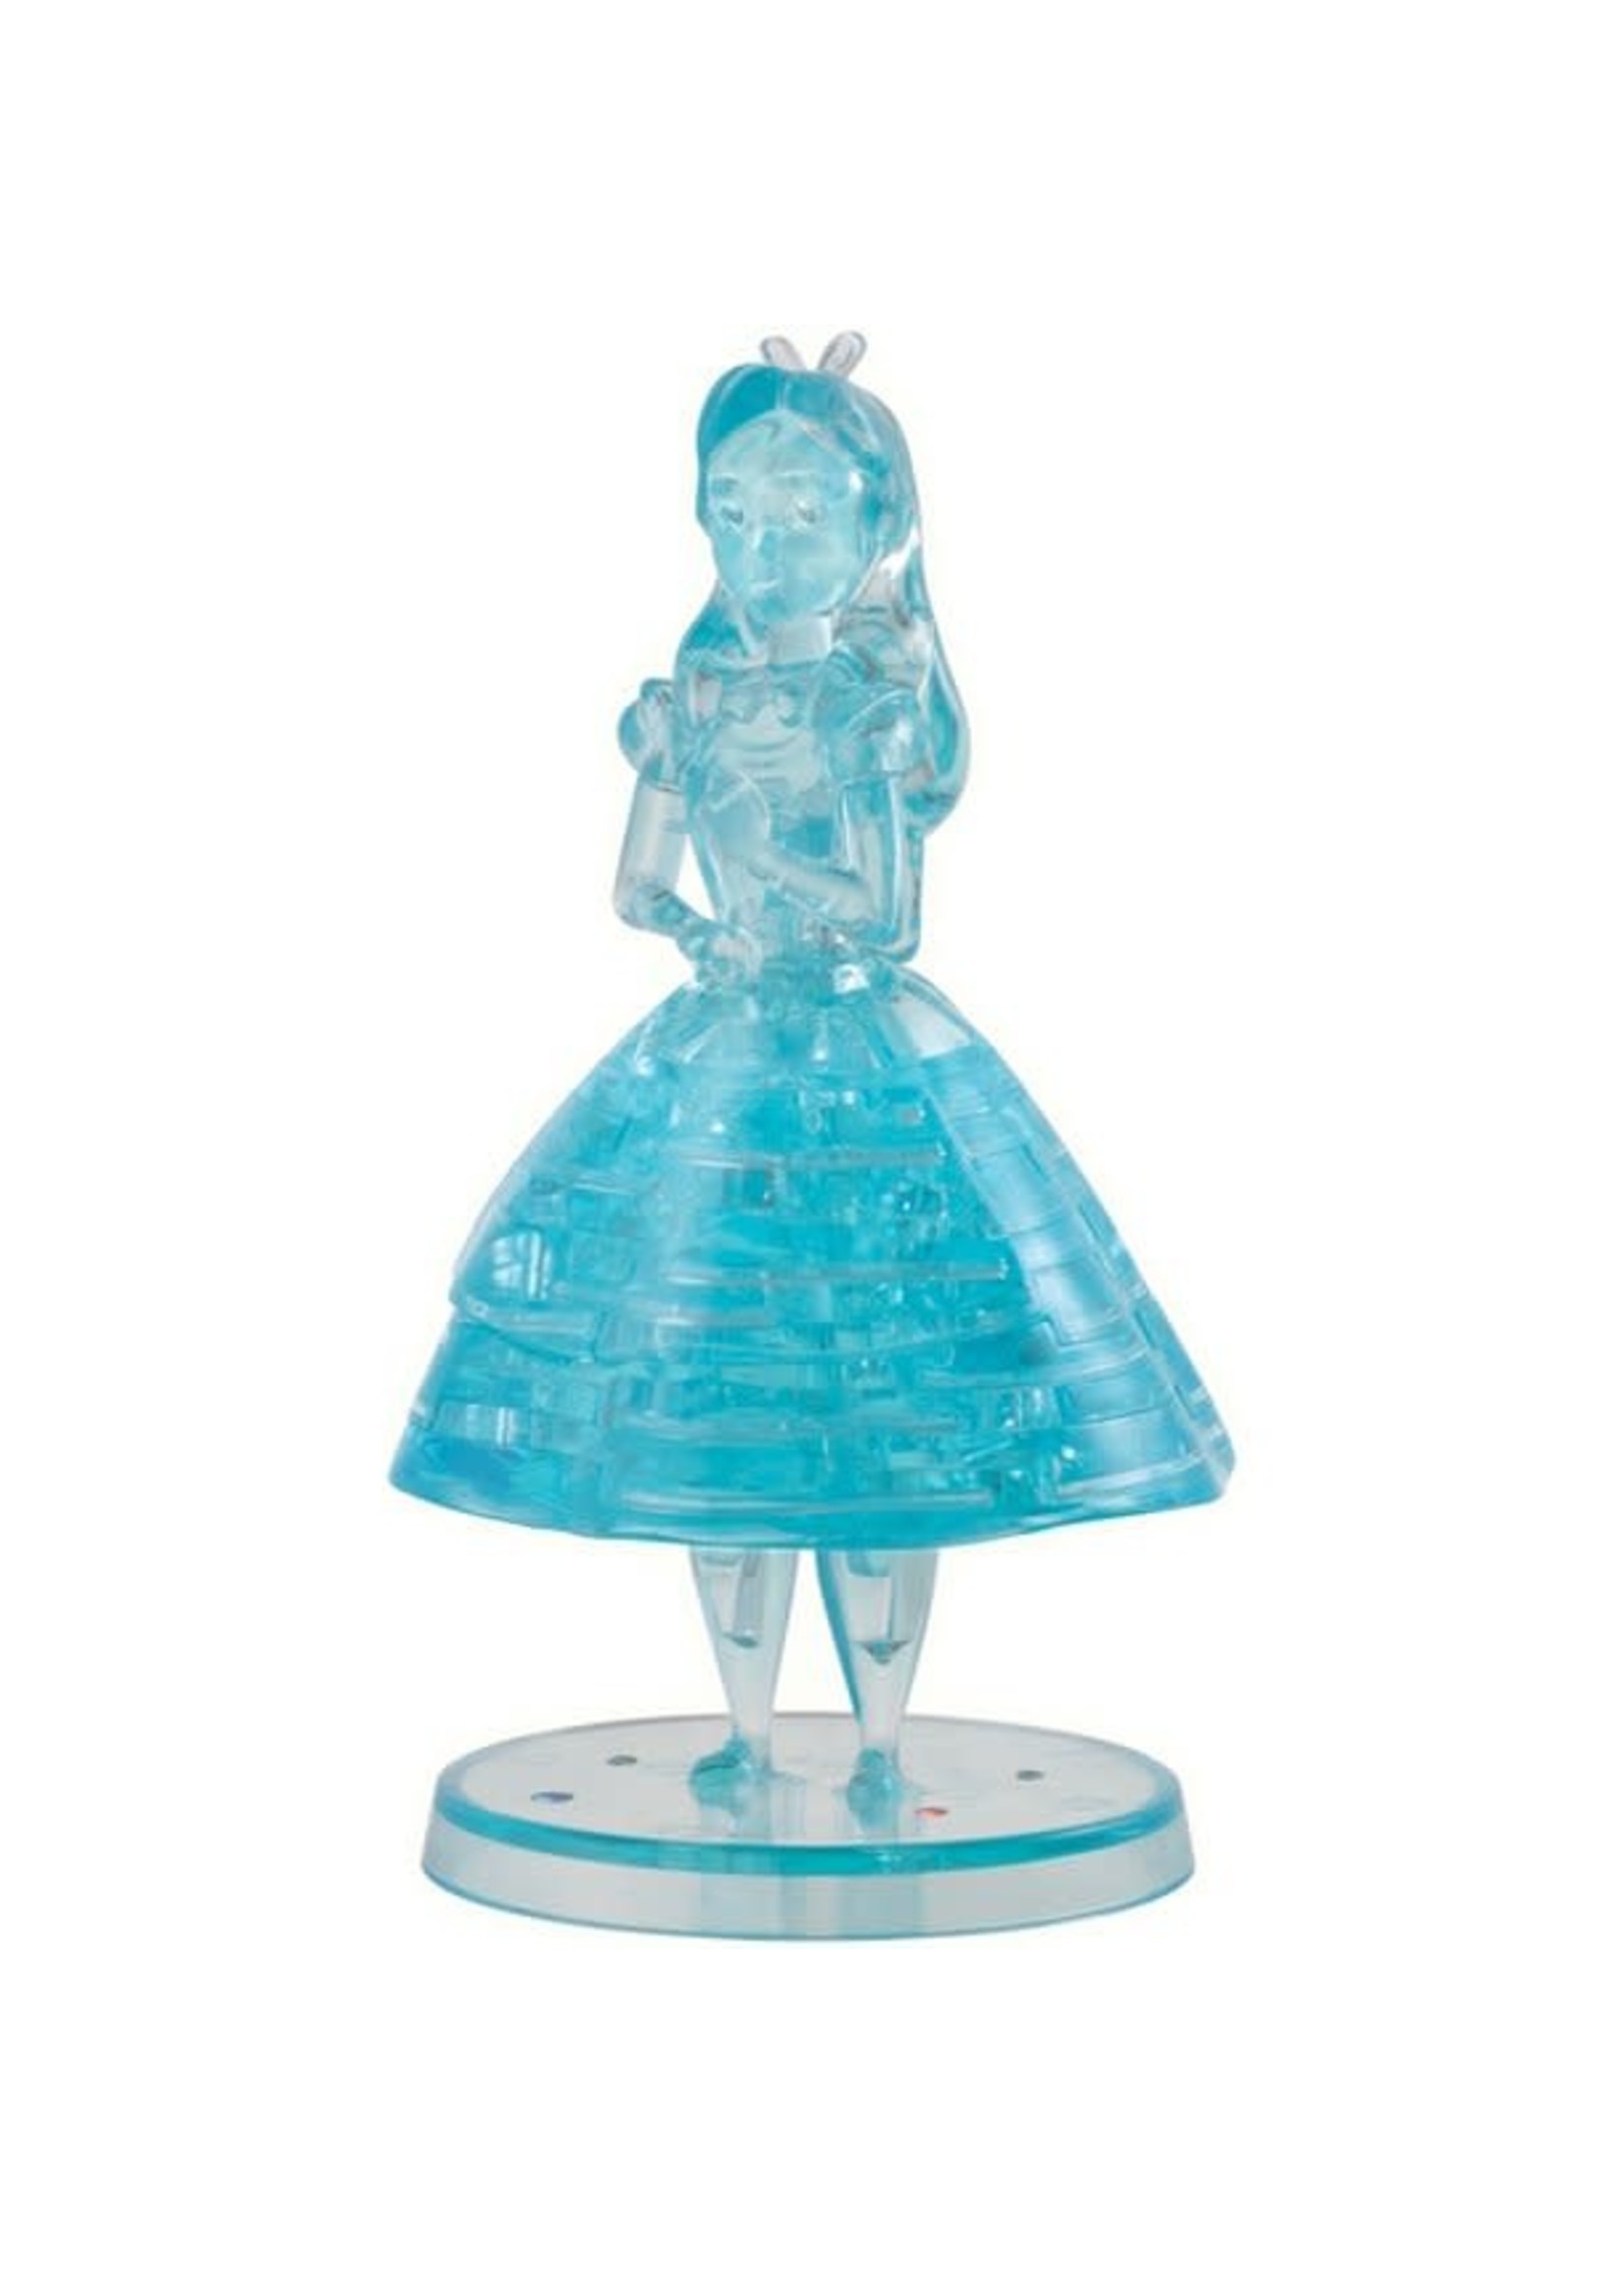 3D Crystal Alice